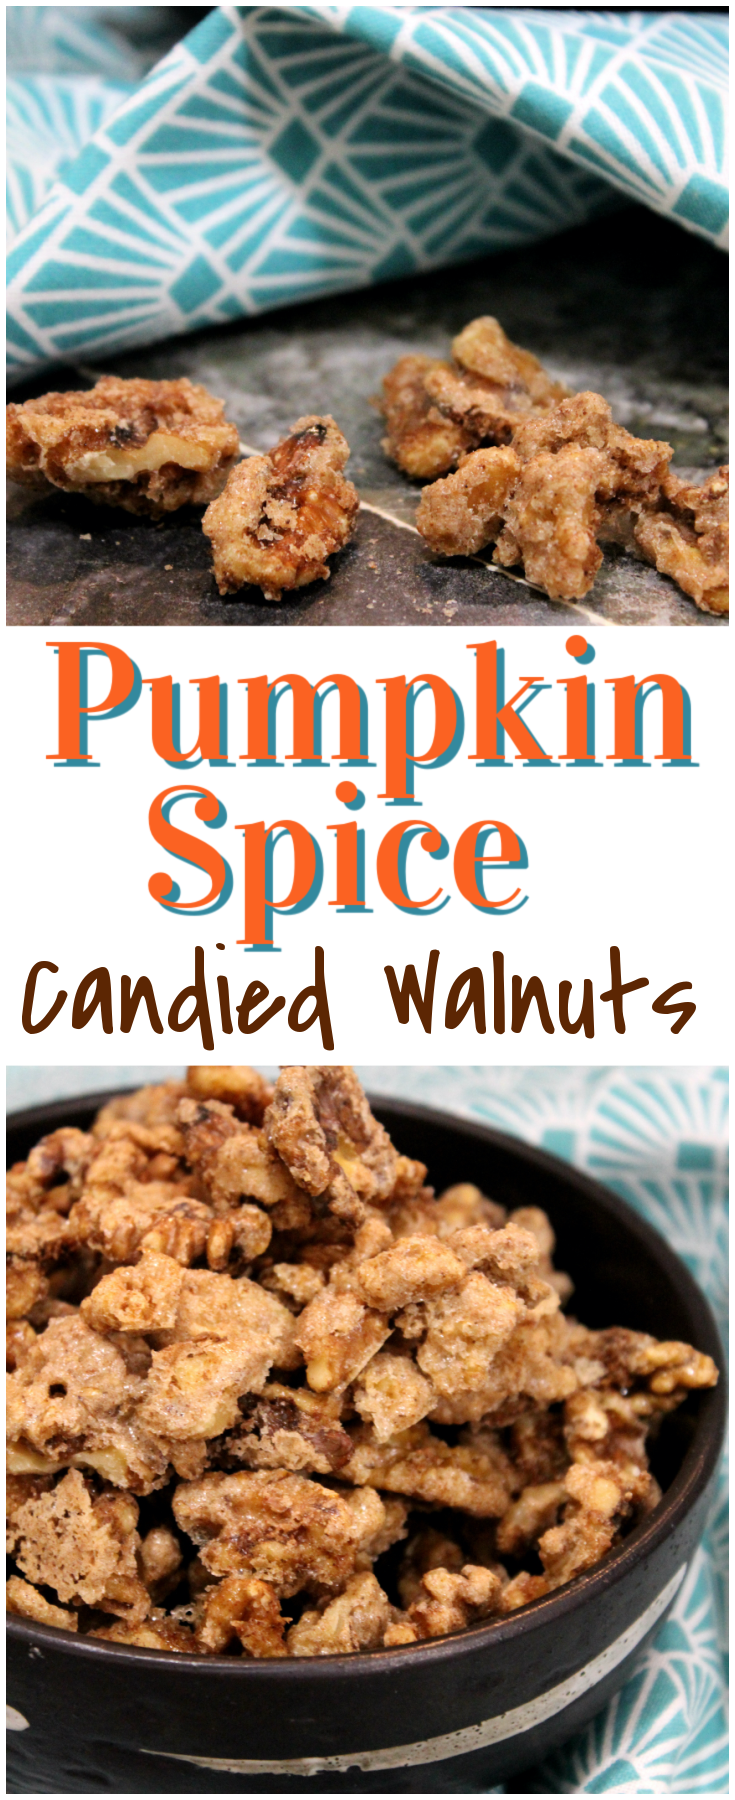 Pumpkin Spice Candied Walnuts